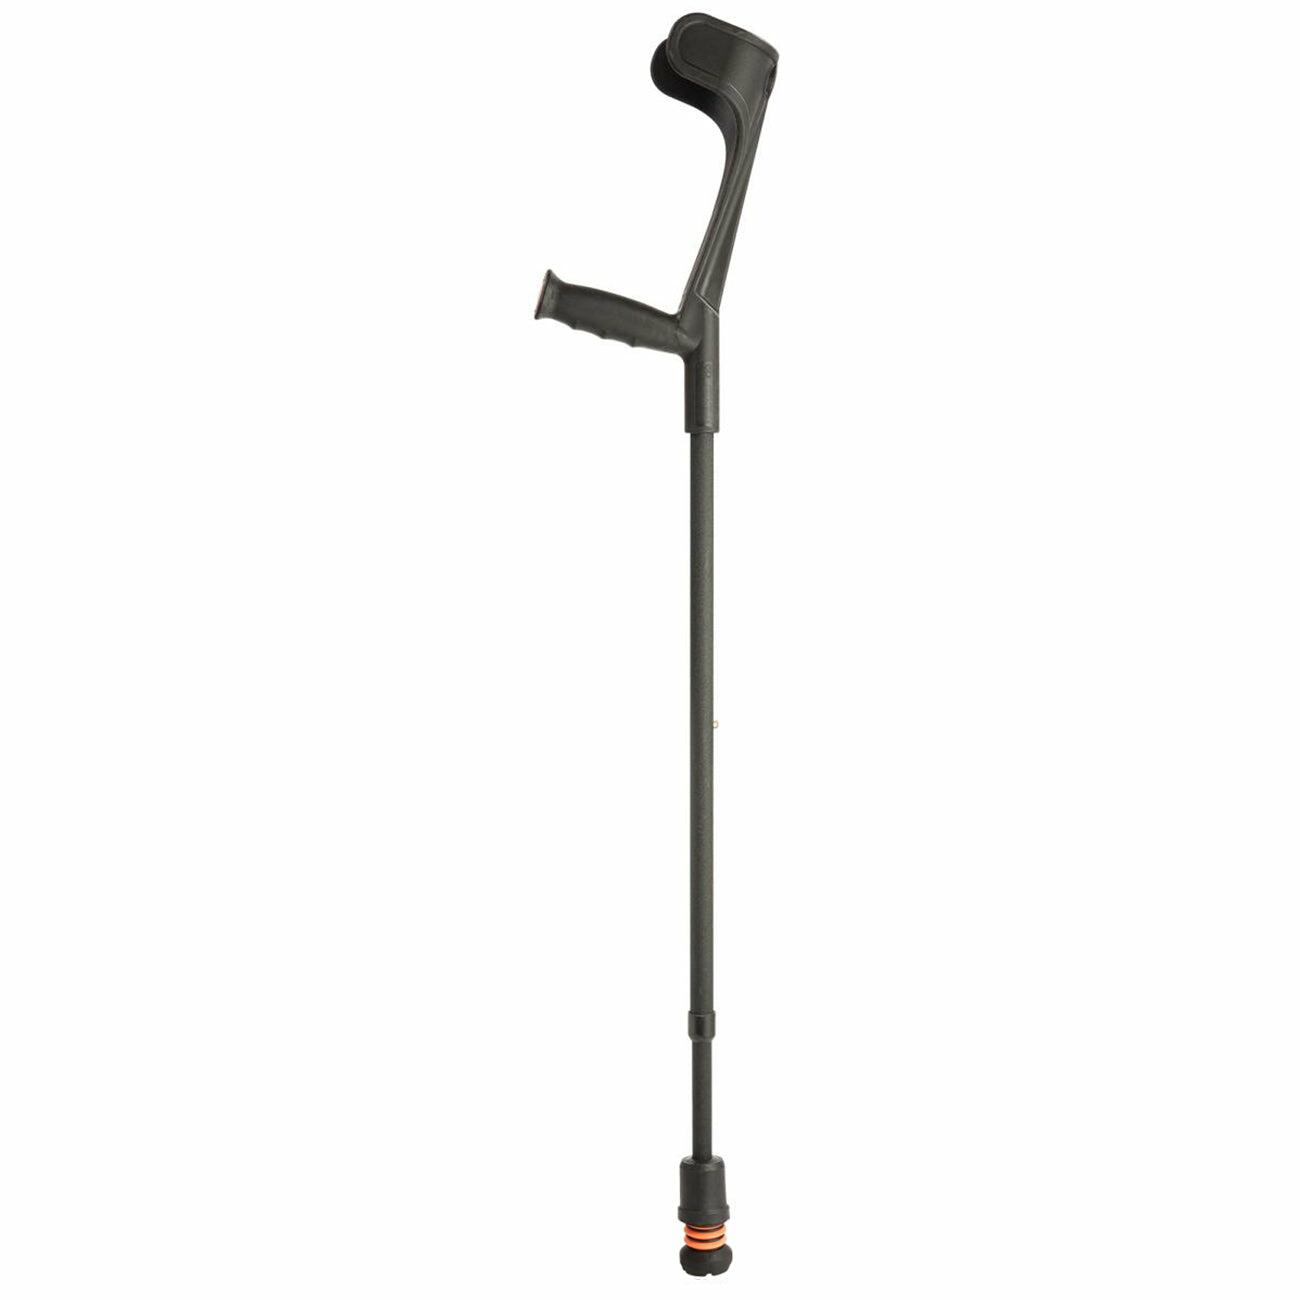 A single Textured black Flexyfoot Soft Grip Open Cuff Crutch